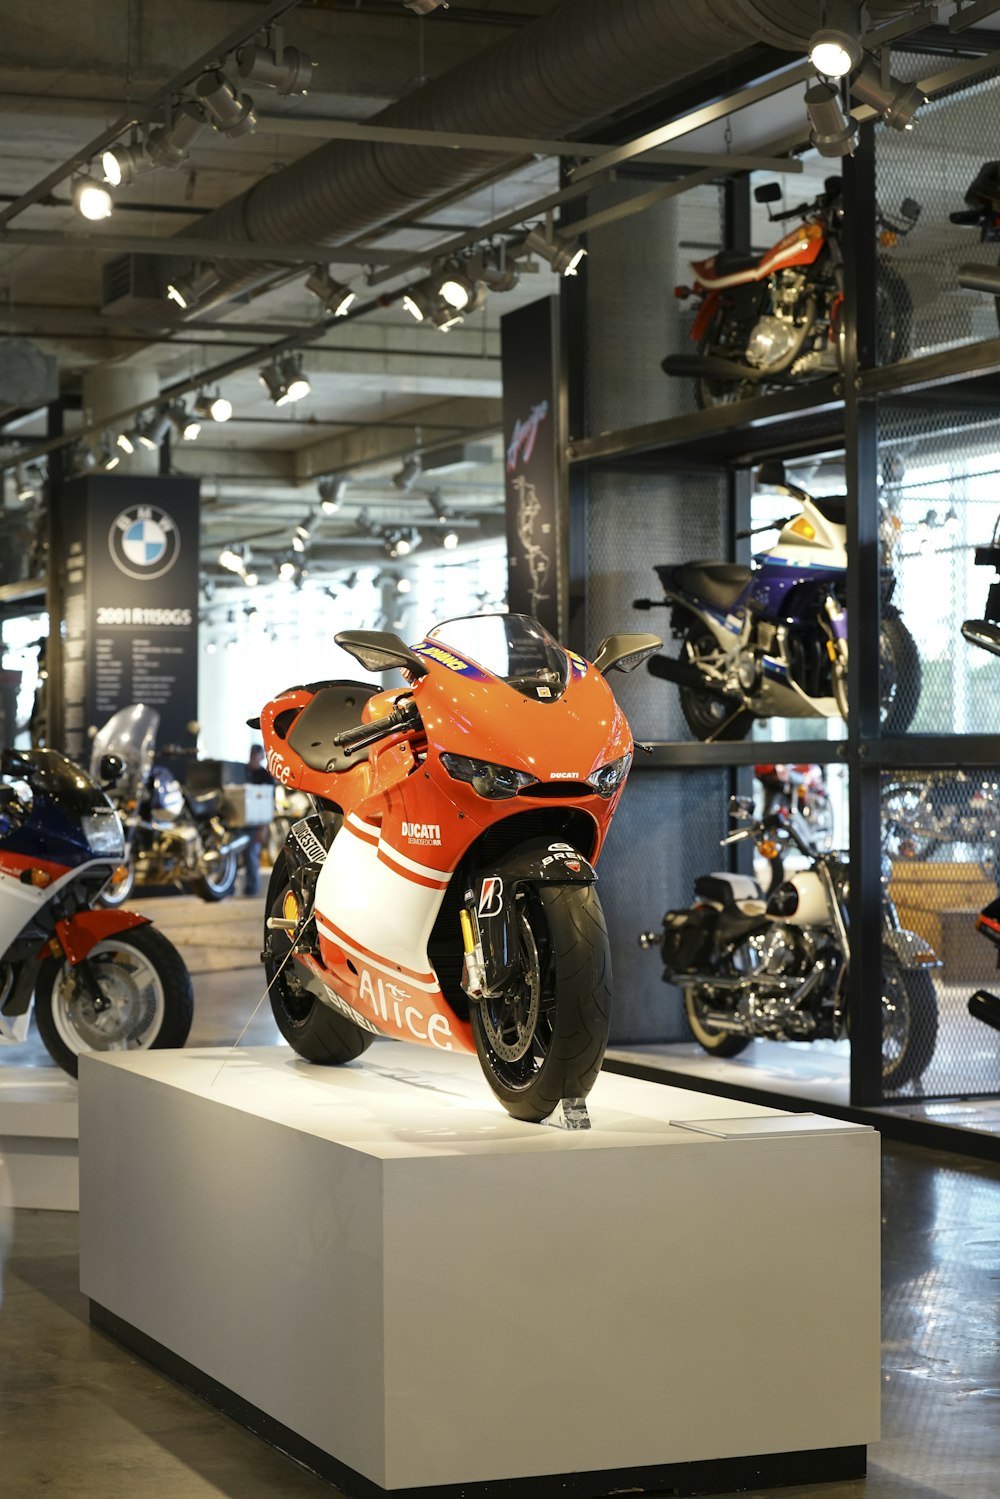 an orange motorcycle is on display in a showroom